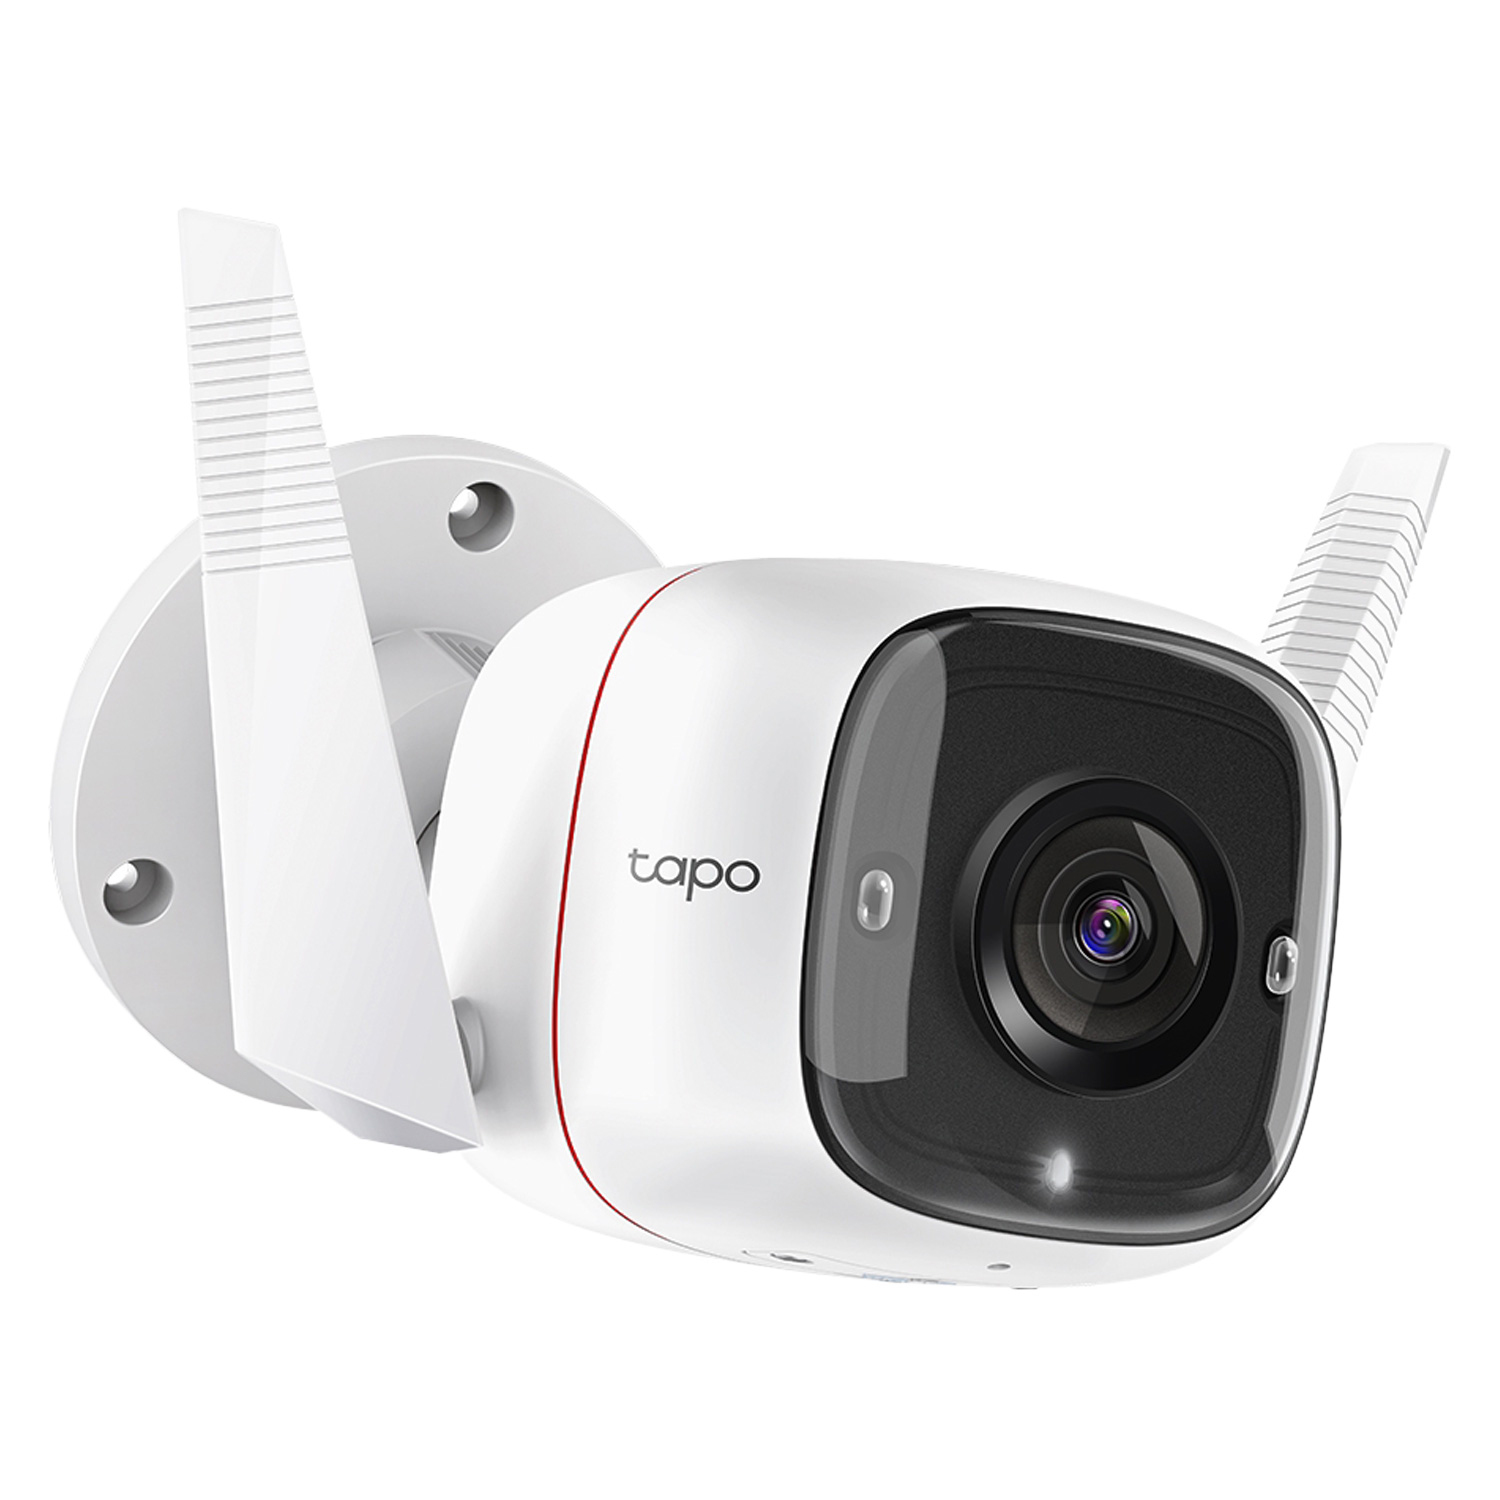 Câmera de Segurança TP-Link Tapo C310 Full HD 3MP WiFi - Branco